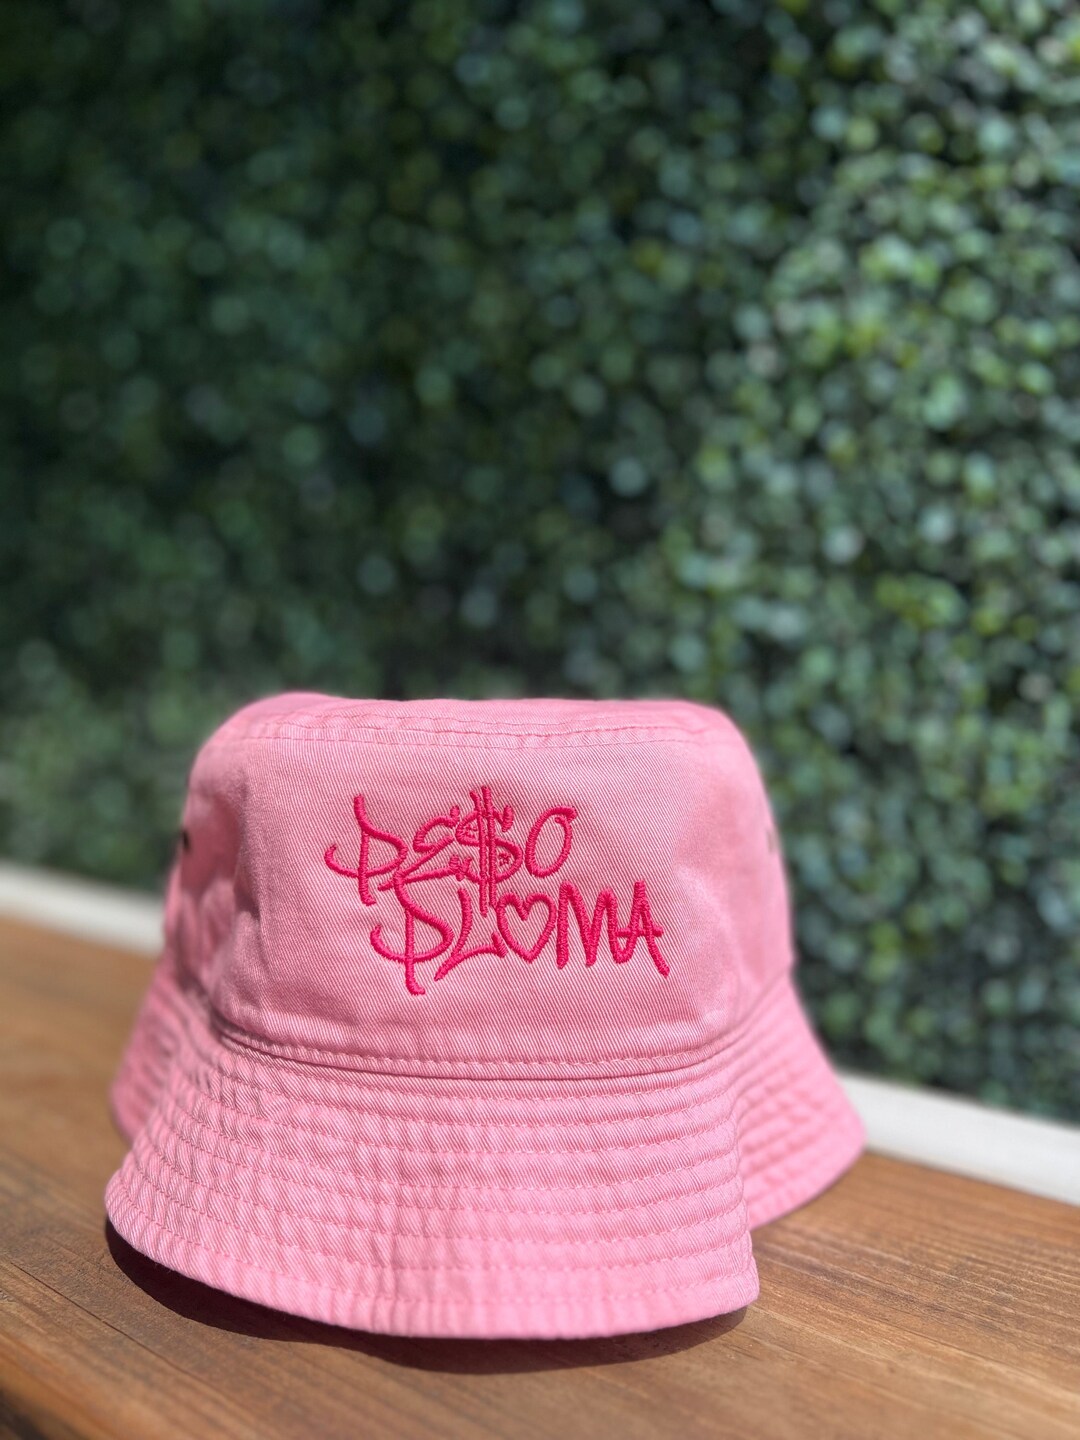 Embroidered Peso Pluma Bucket Hat - Etsy